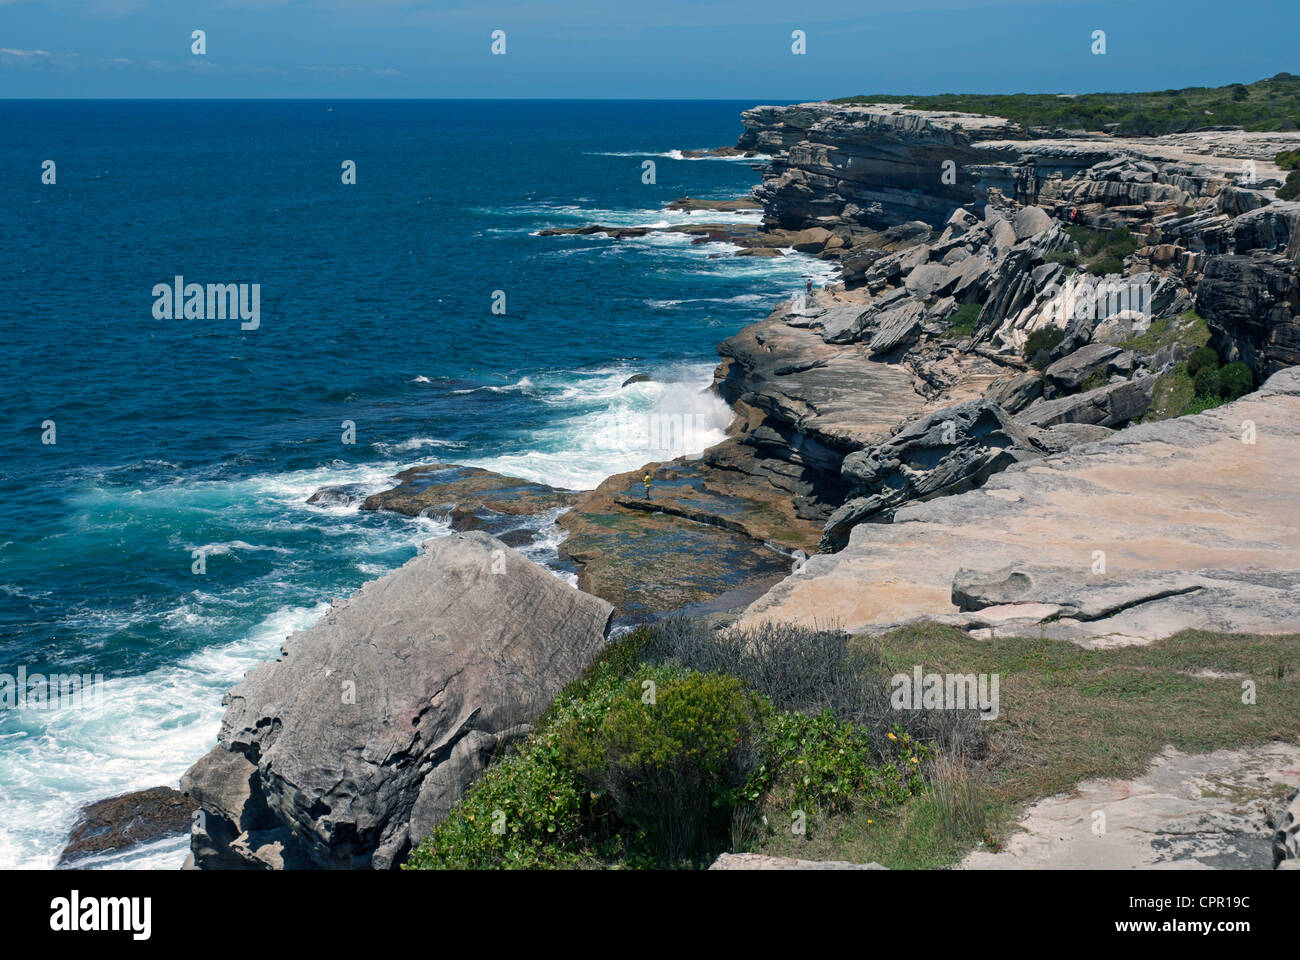 Cape Solander Lookout , New South Wales, Australia Stock Photo